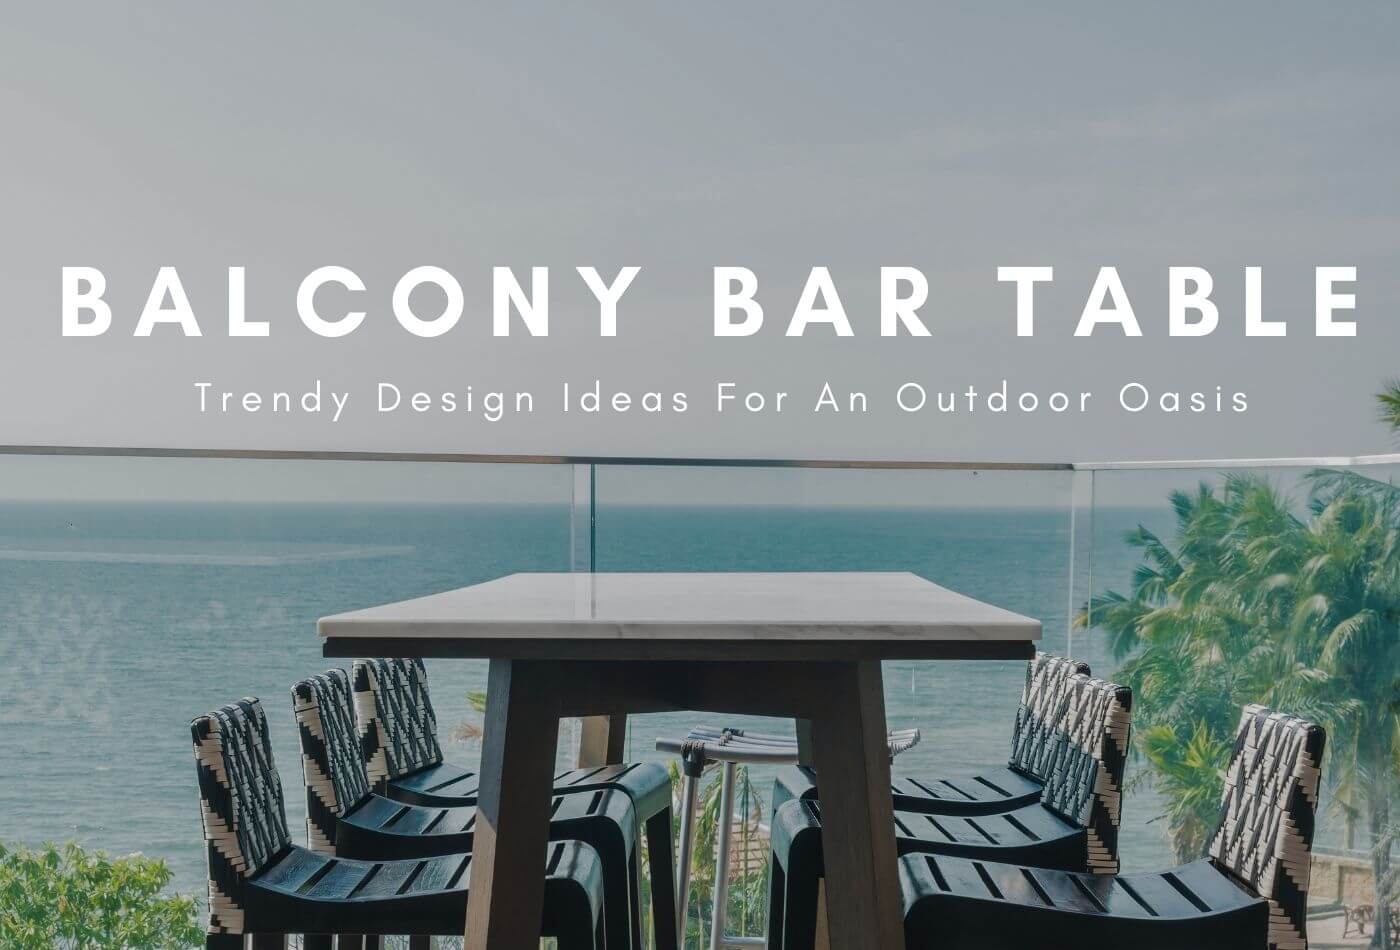 Balcony Bar Table Trendy Design Ideas For An Outdoor Oasis